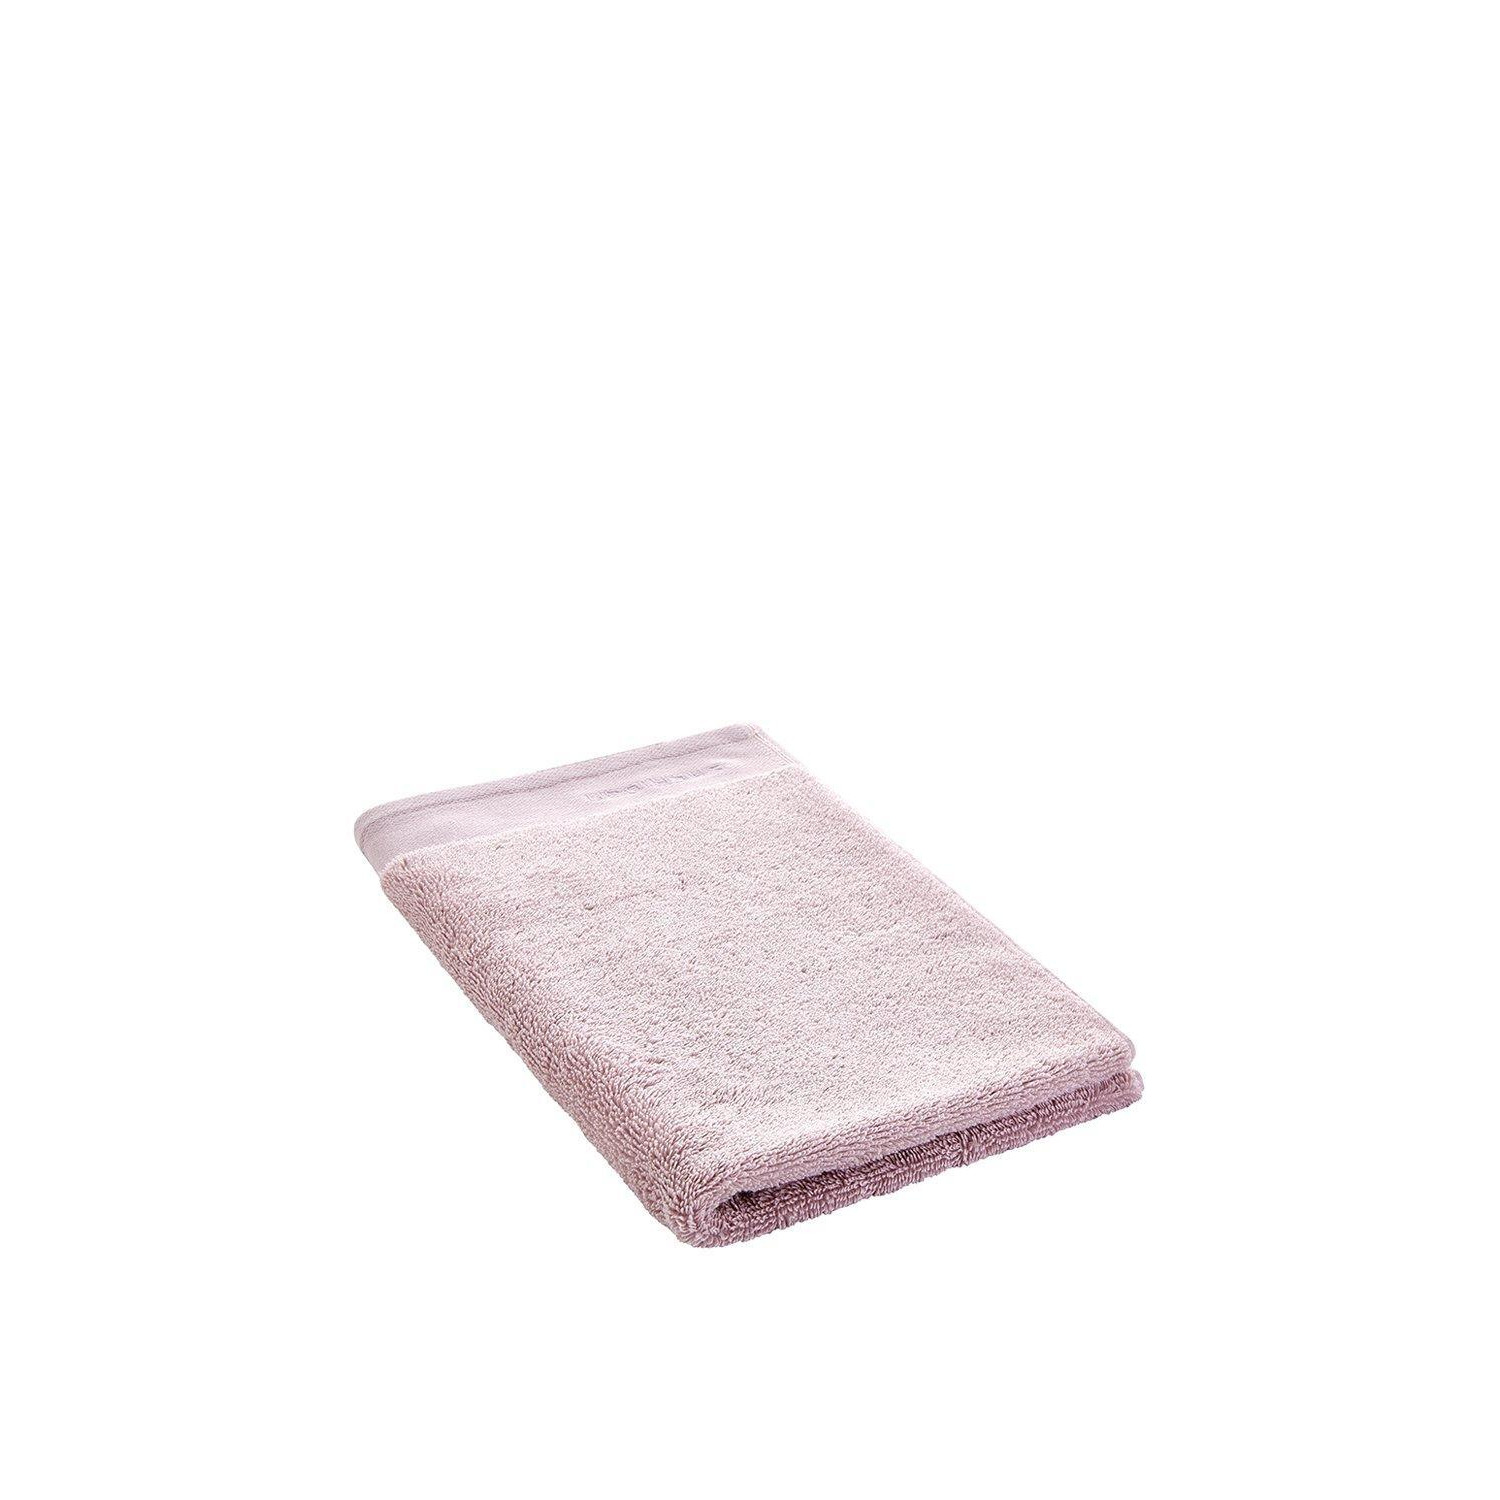 Luxury Retreat Cotton Towel - image 1